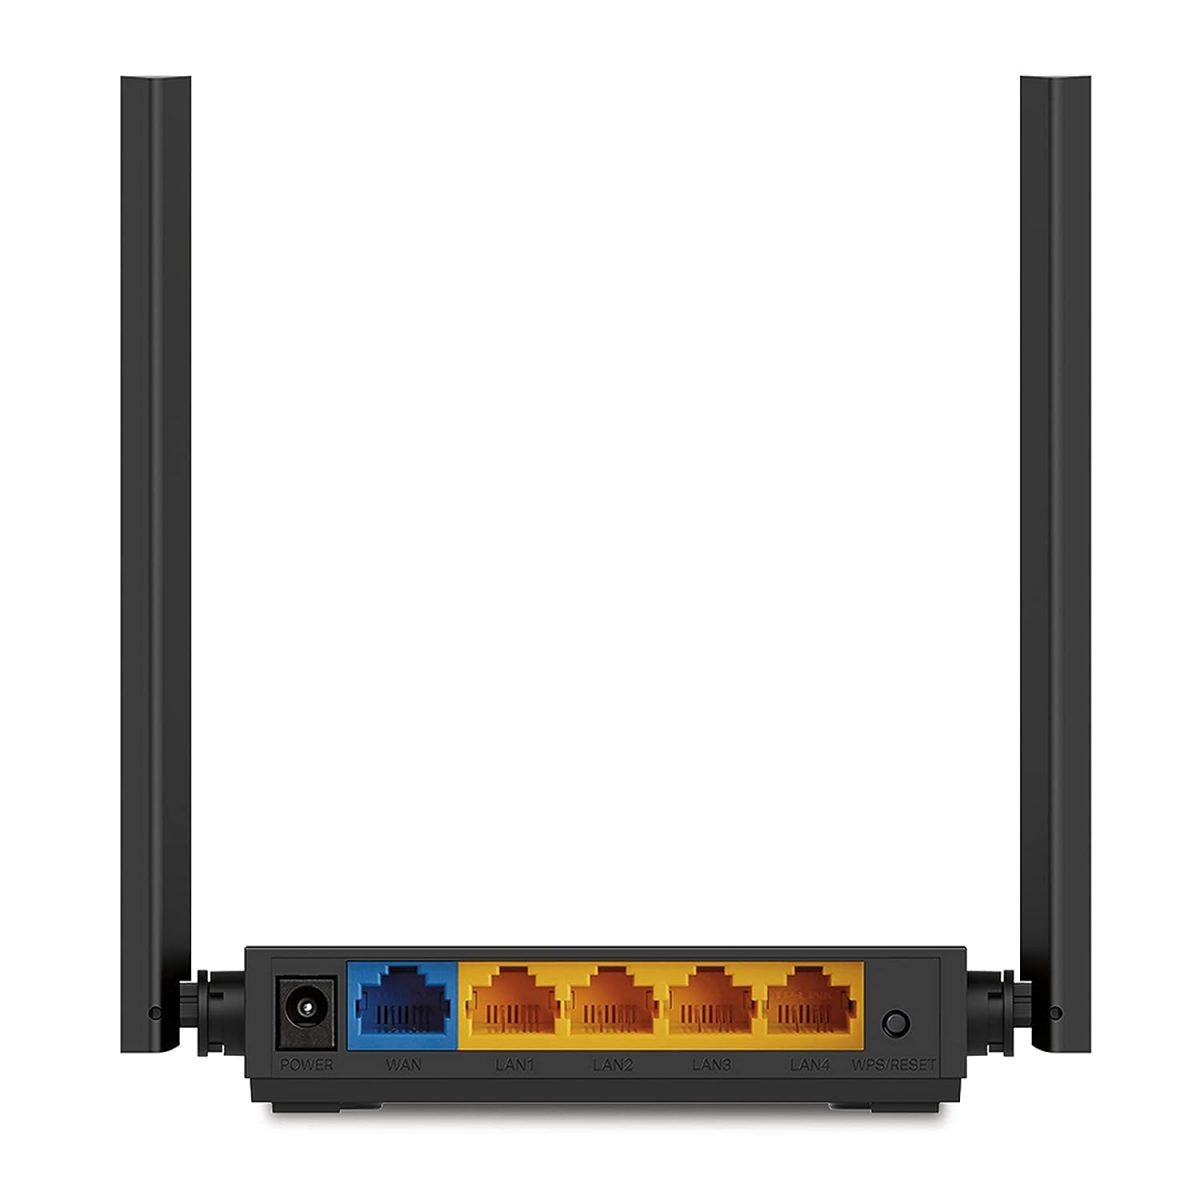 TP-Link Archer C54 Wireless Router